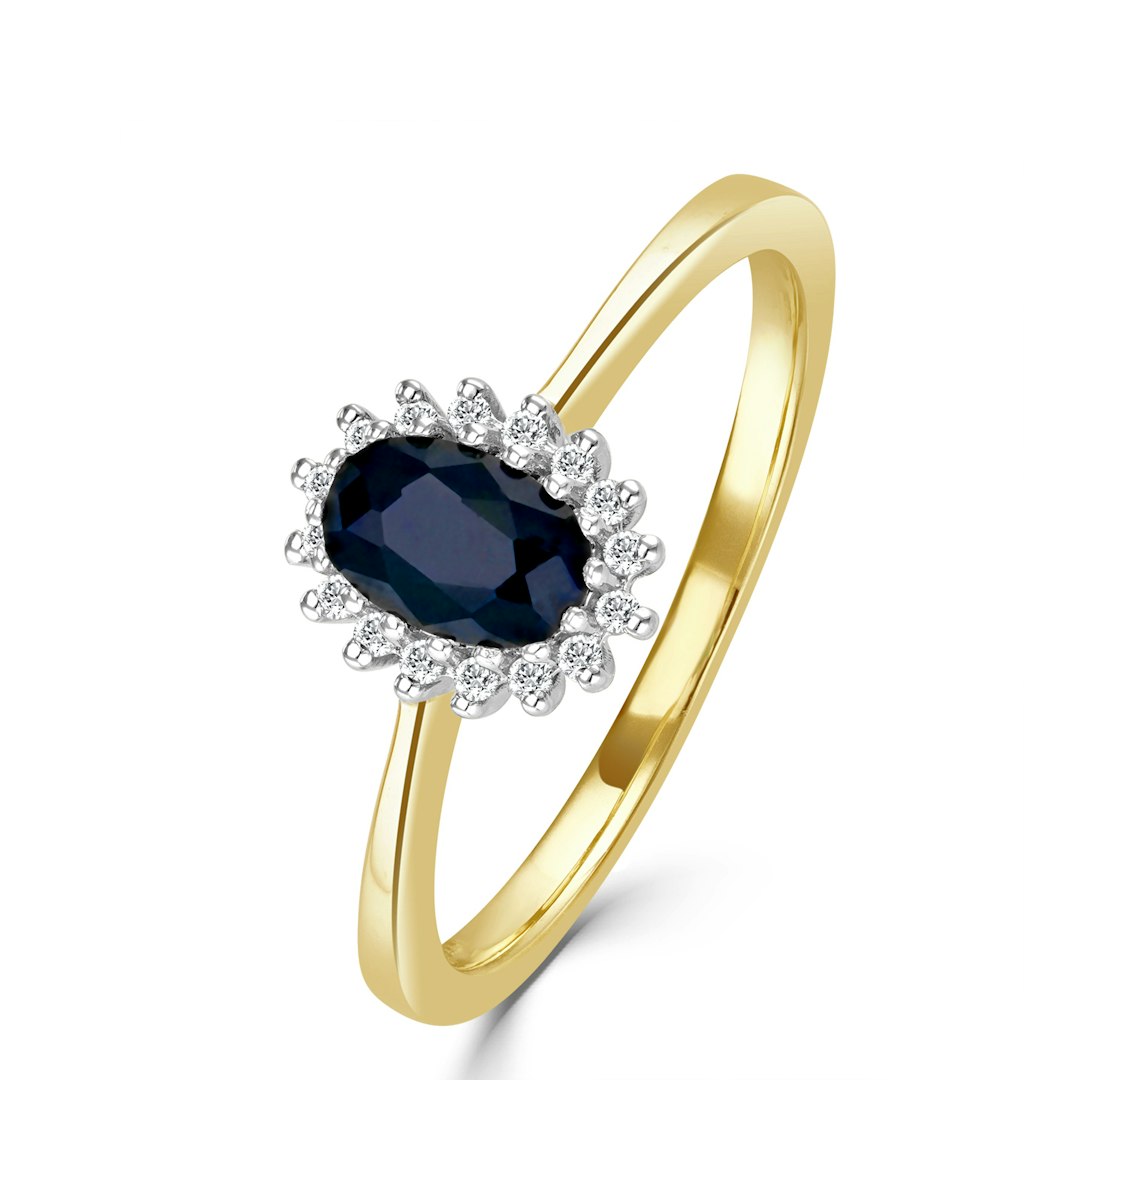 Blue Sapphire Rings | The Diamond Store